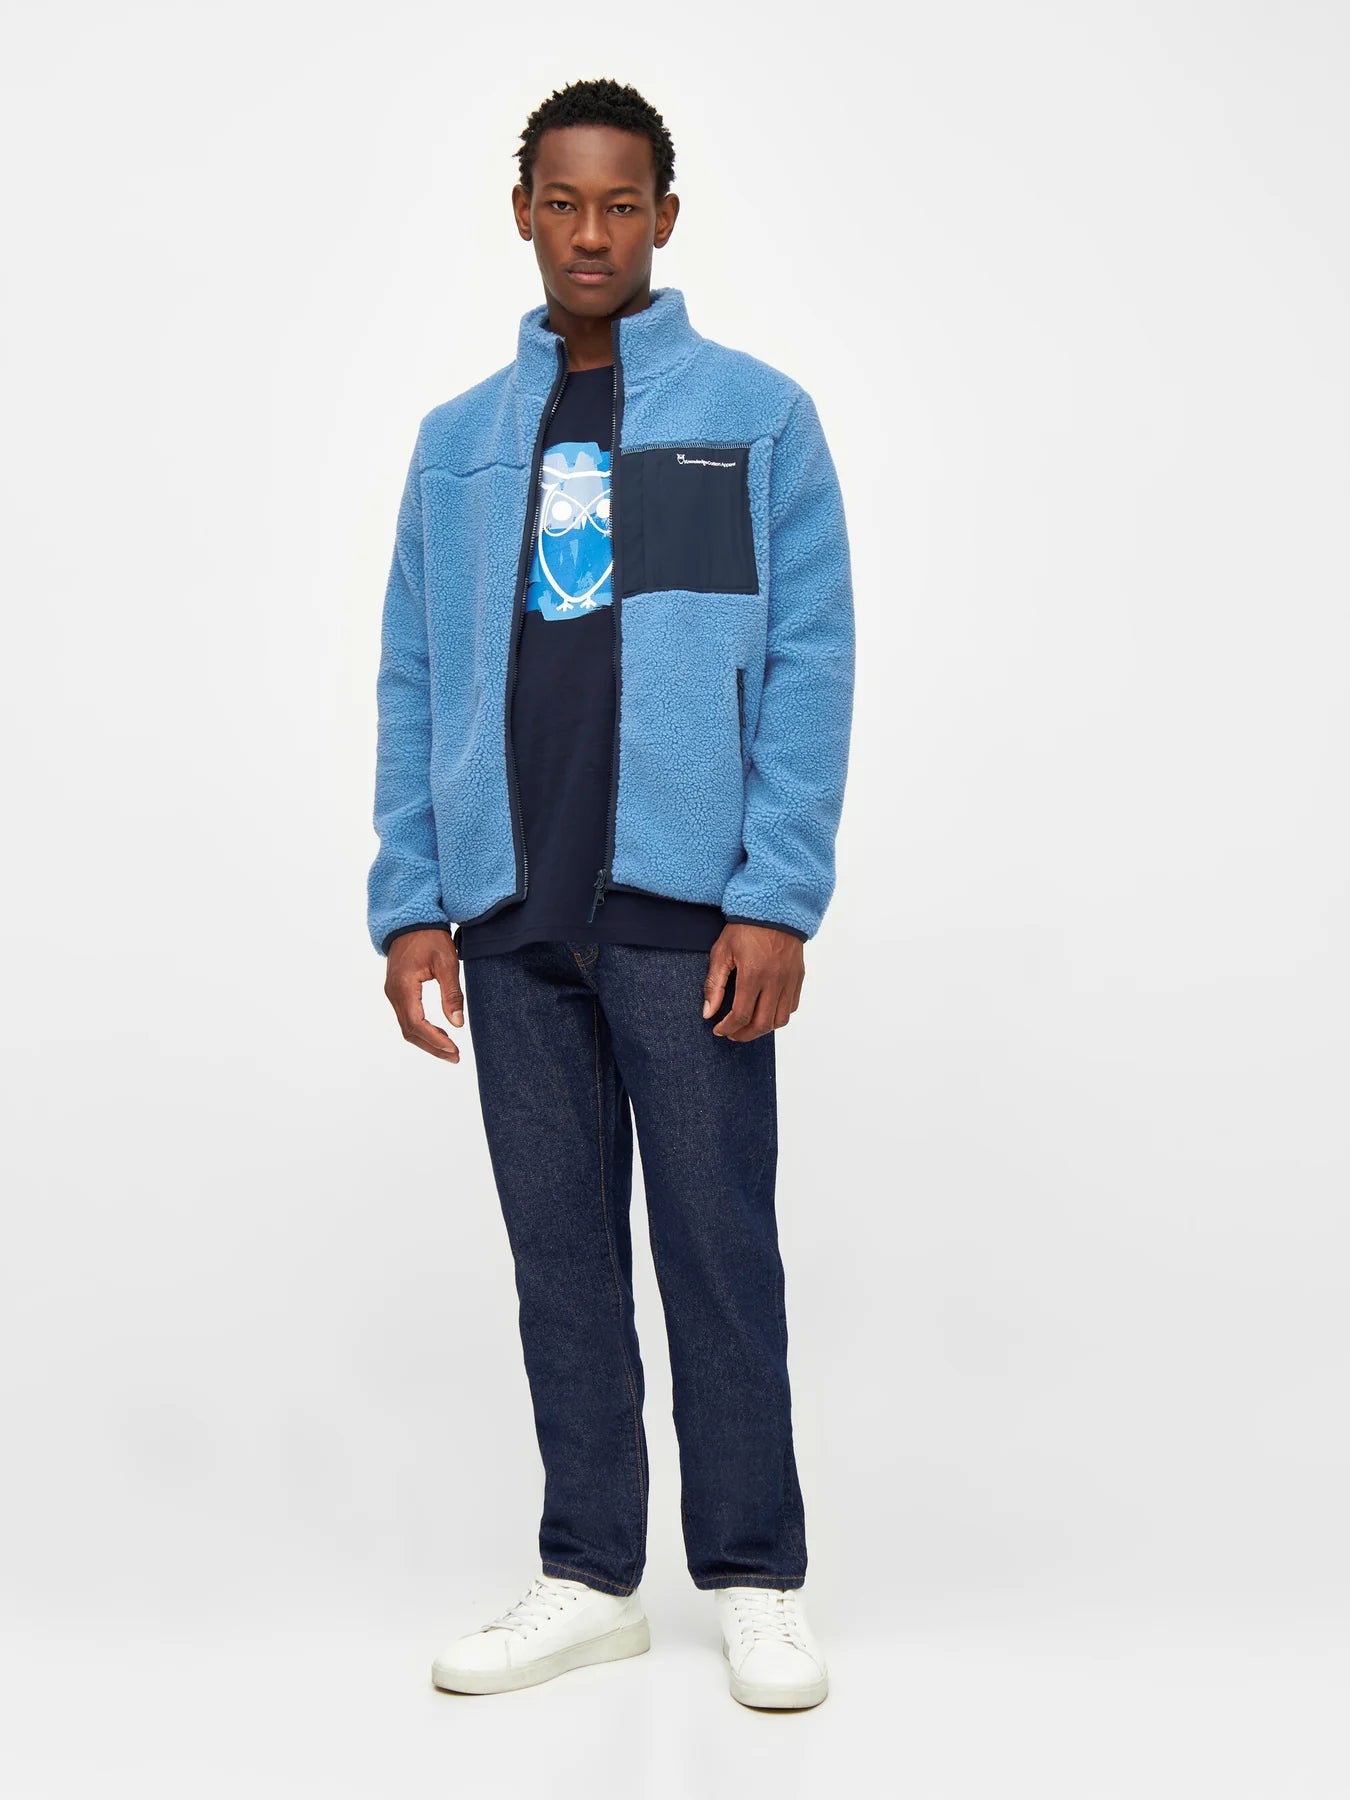 KnowledgeCotton Apparel M's Teddy fleece zip jacket - 100% Recycled PET Azure Blue Jacket